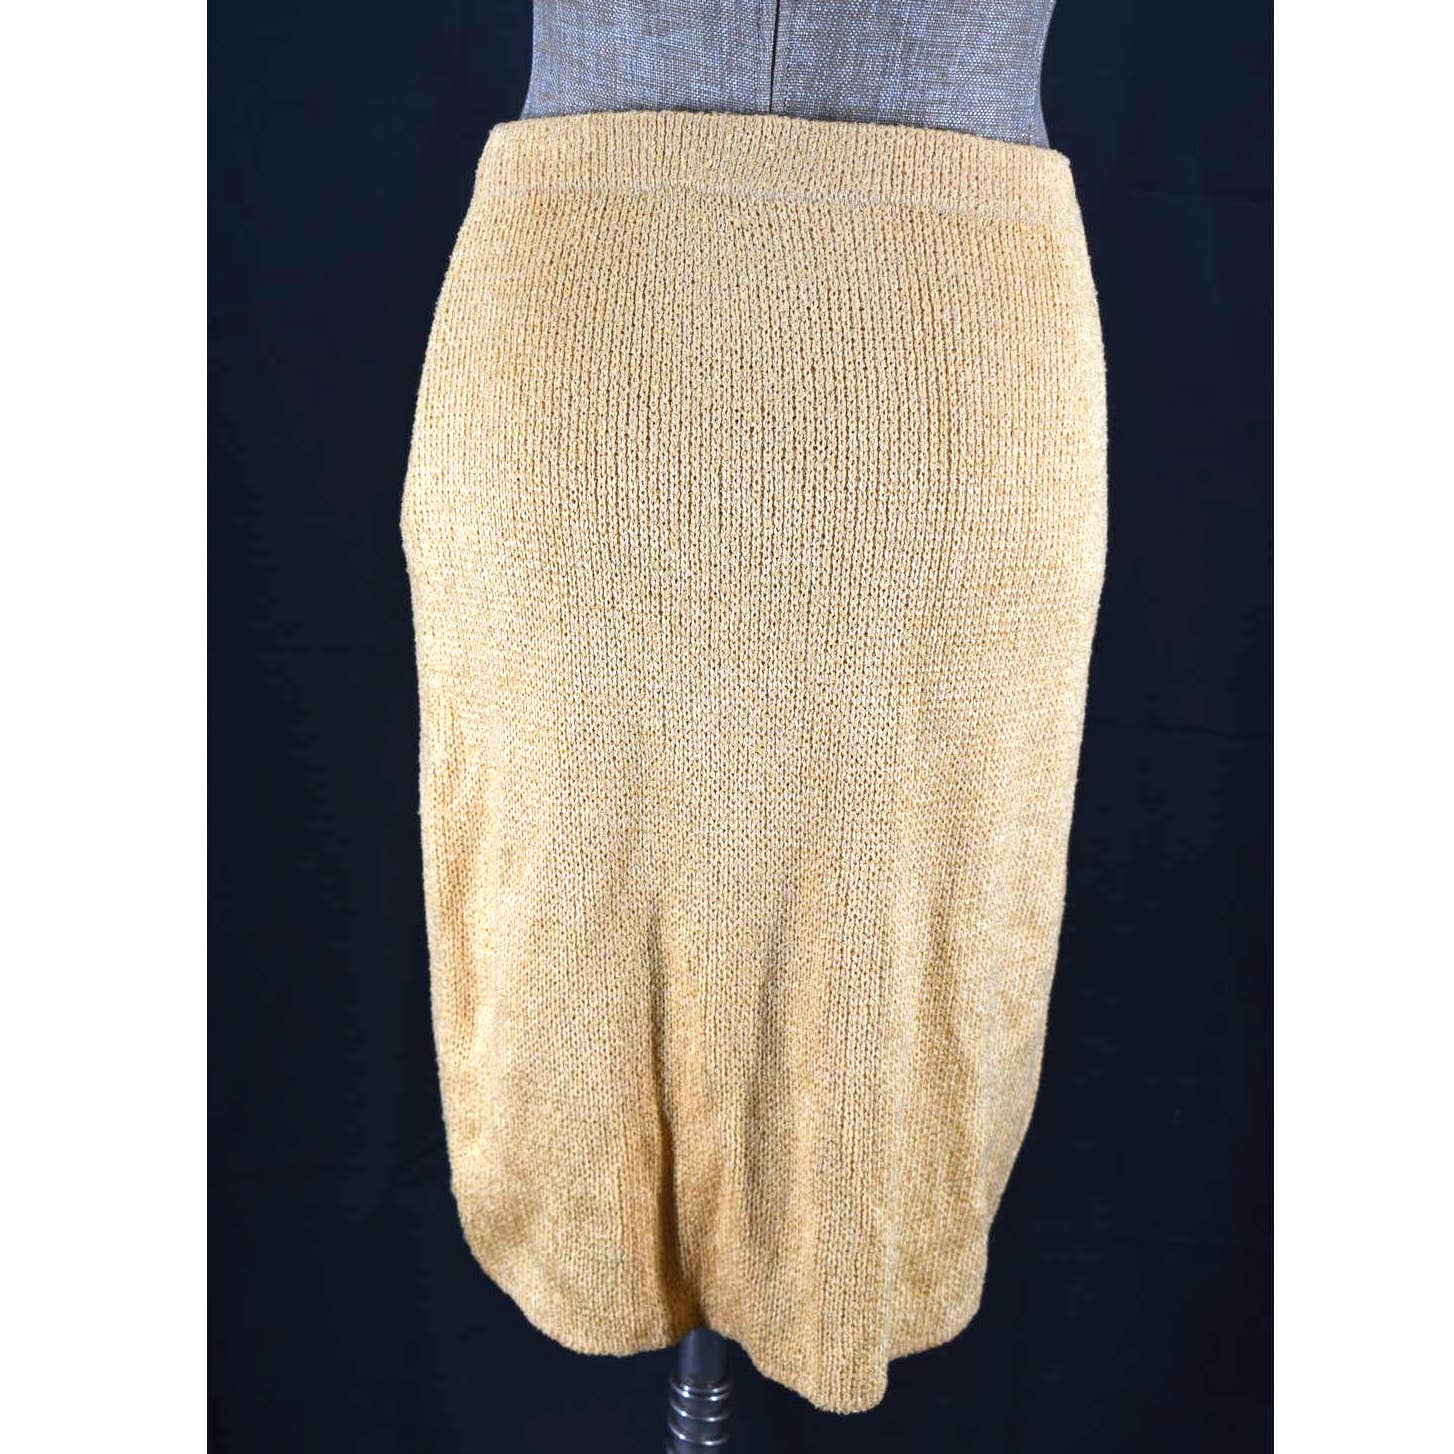 Vintage French Rags Peach Knit Midi Skirt - 3 Medium